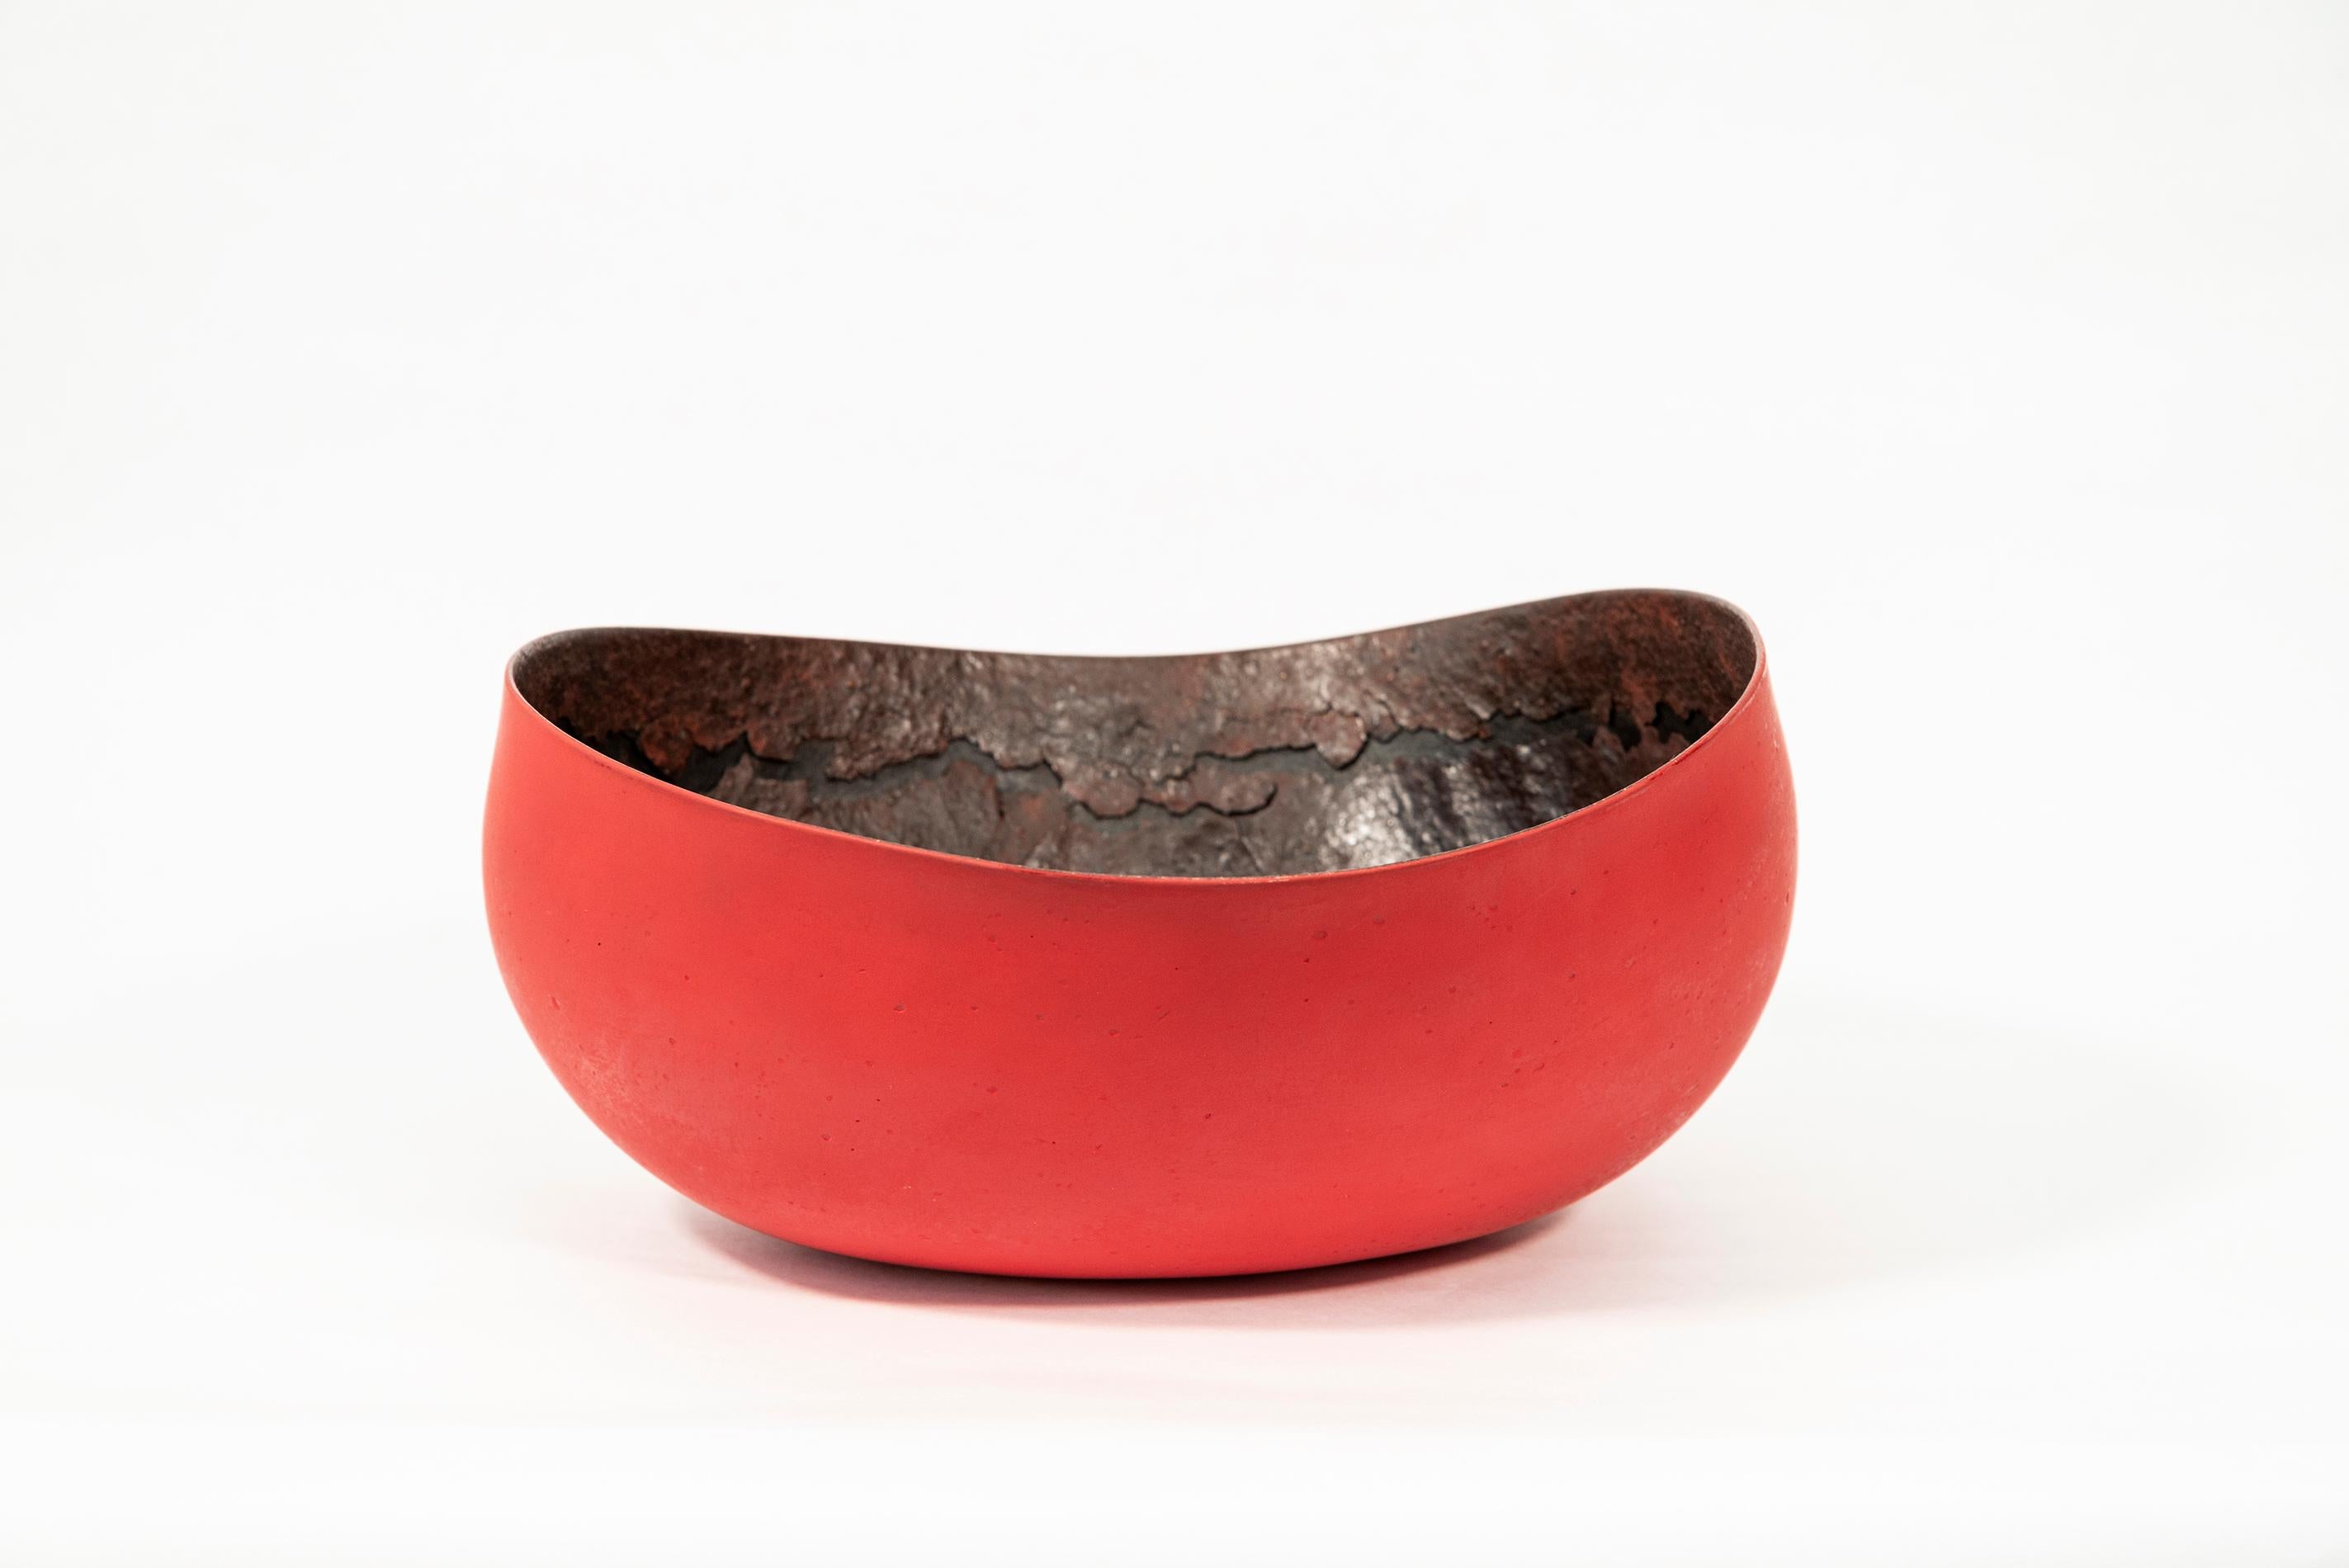 Steven Heinemann Abstract Sculpture - Untitled Bowl (Red)  -  red, black, nature inspired, textured, ceramic vessel